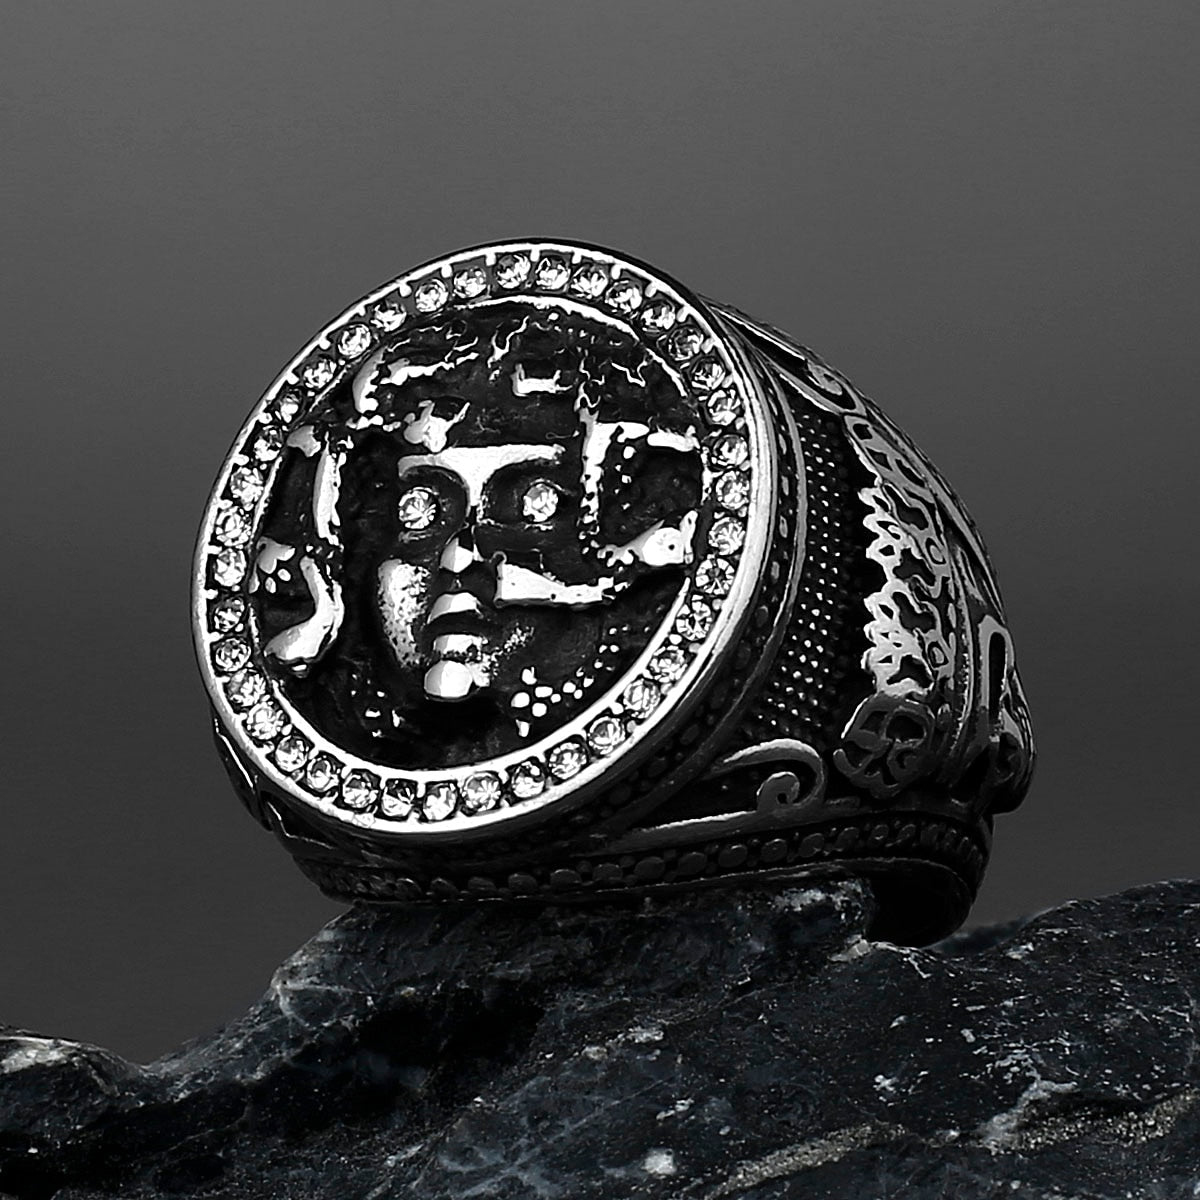 Medusa Ring | Greek Mythology Gorgon Protection Amulet | Gorgoneion Pagan Worship Jewelry | Gorgo Witchy Accessory | Apollo Tarot Shop